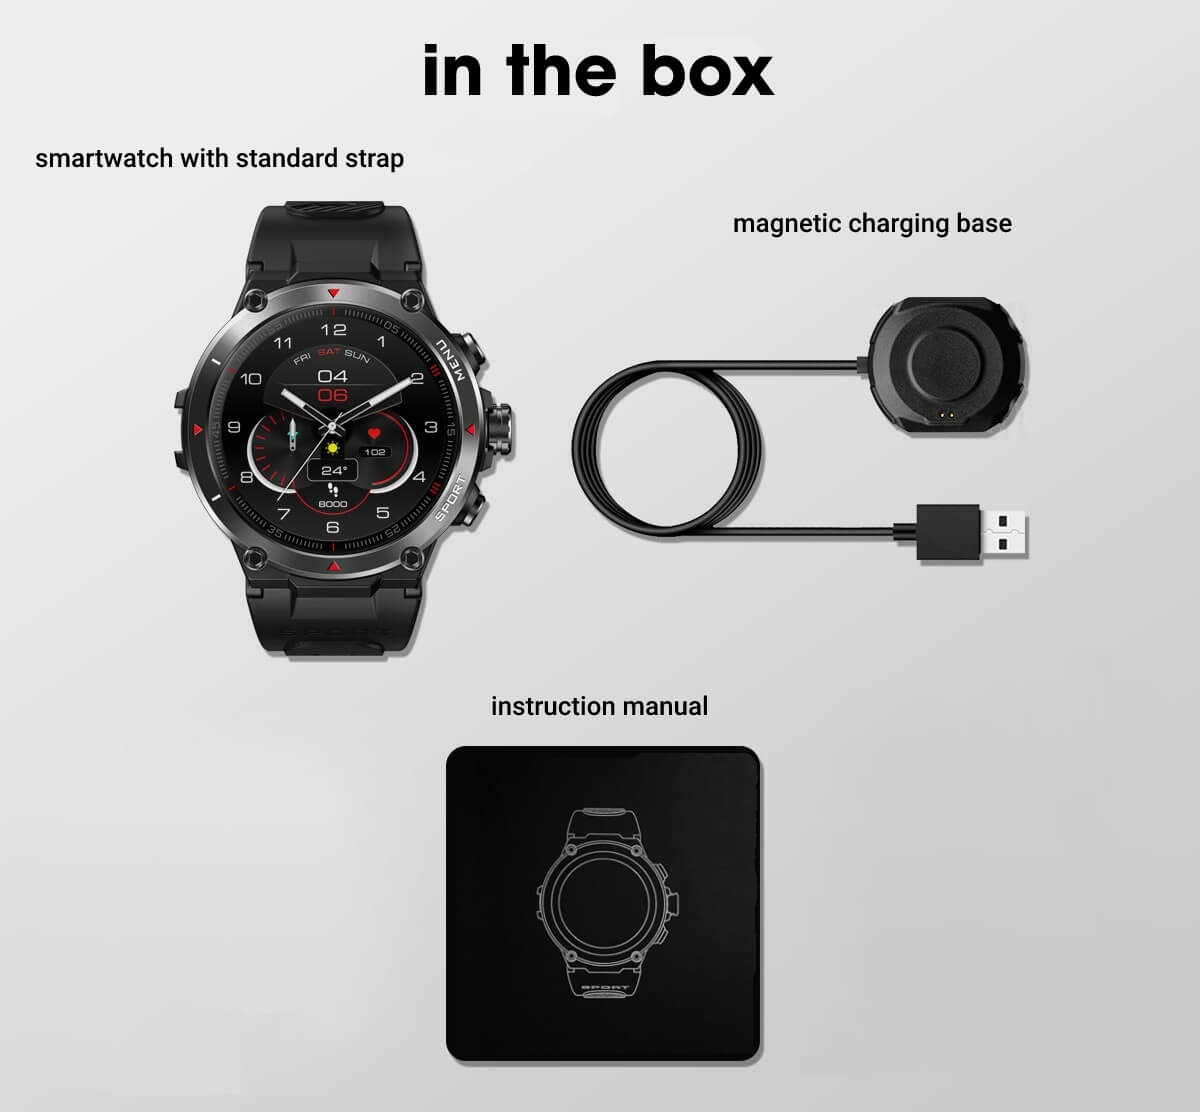 gps smartwatch box contents